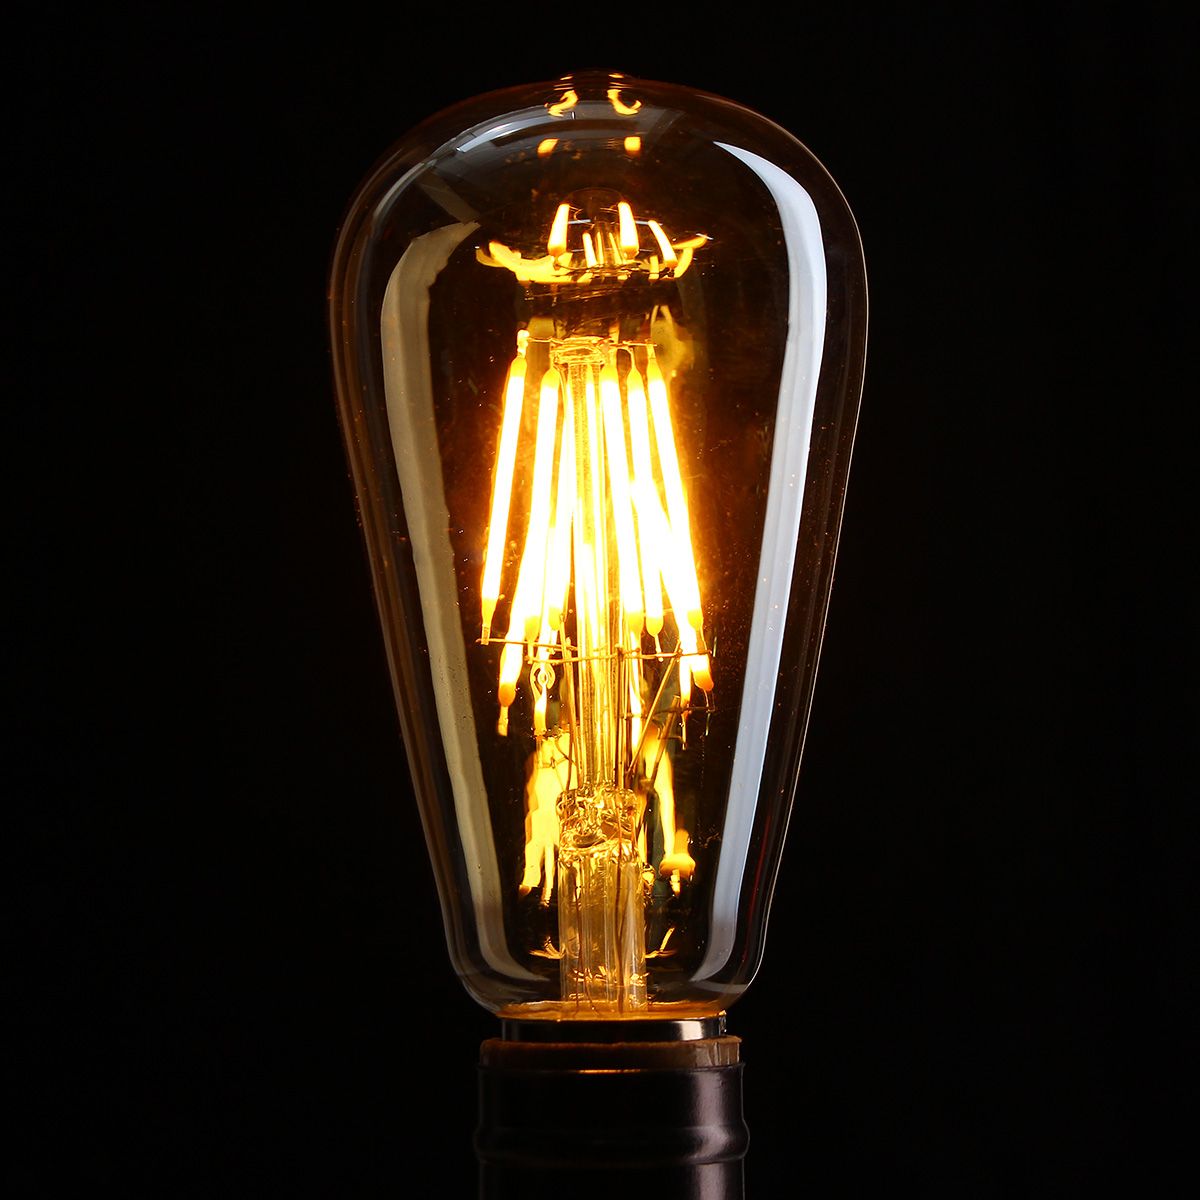 E27-ST64-6W-Golden-Cover-Dimmable-Edison-Retro-Vintage-Filament-COB-LED-Bulb-Light-Lamp-AC110220V-1113827